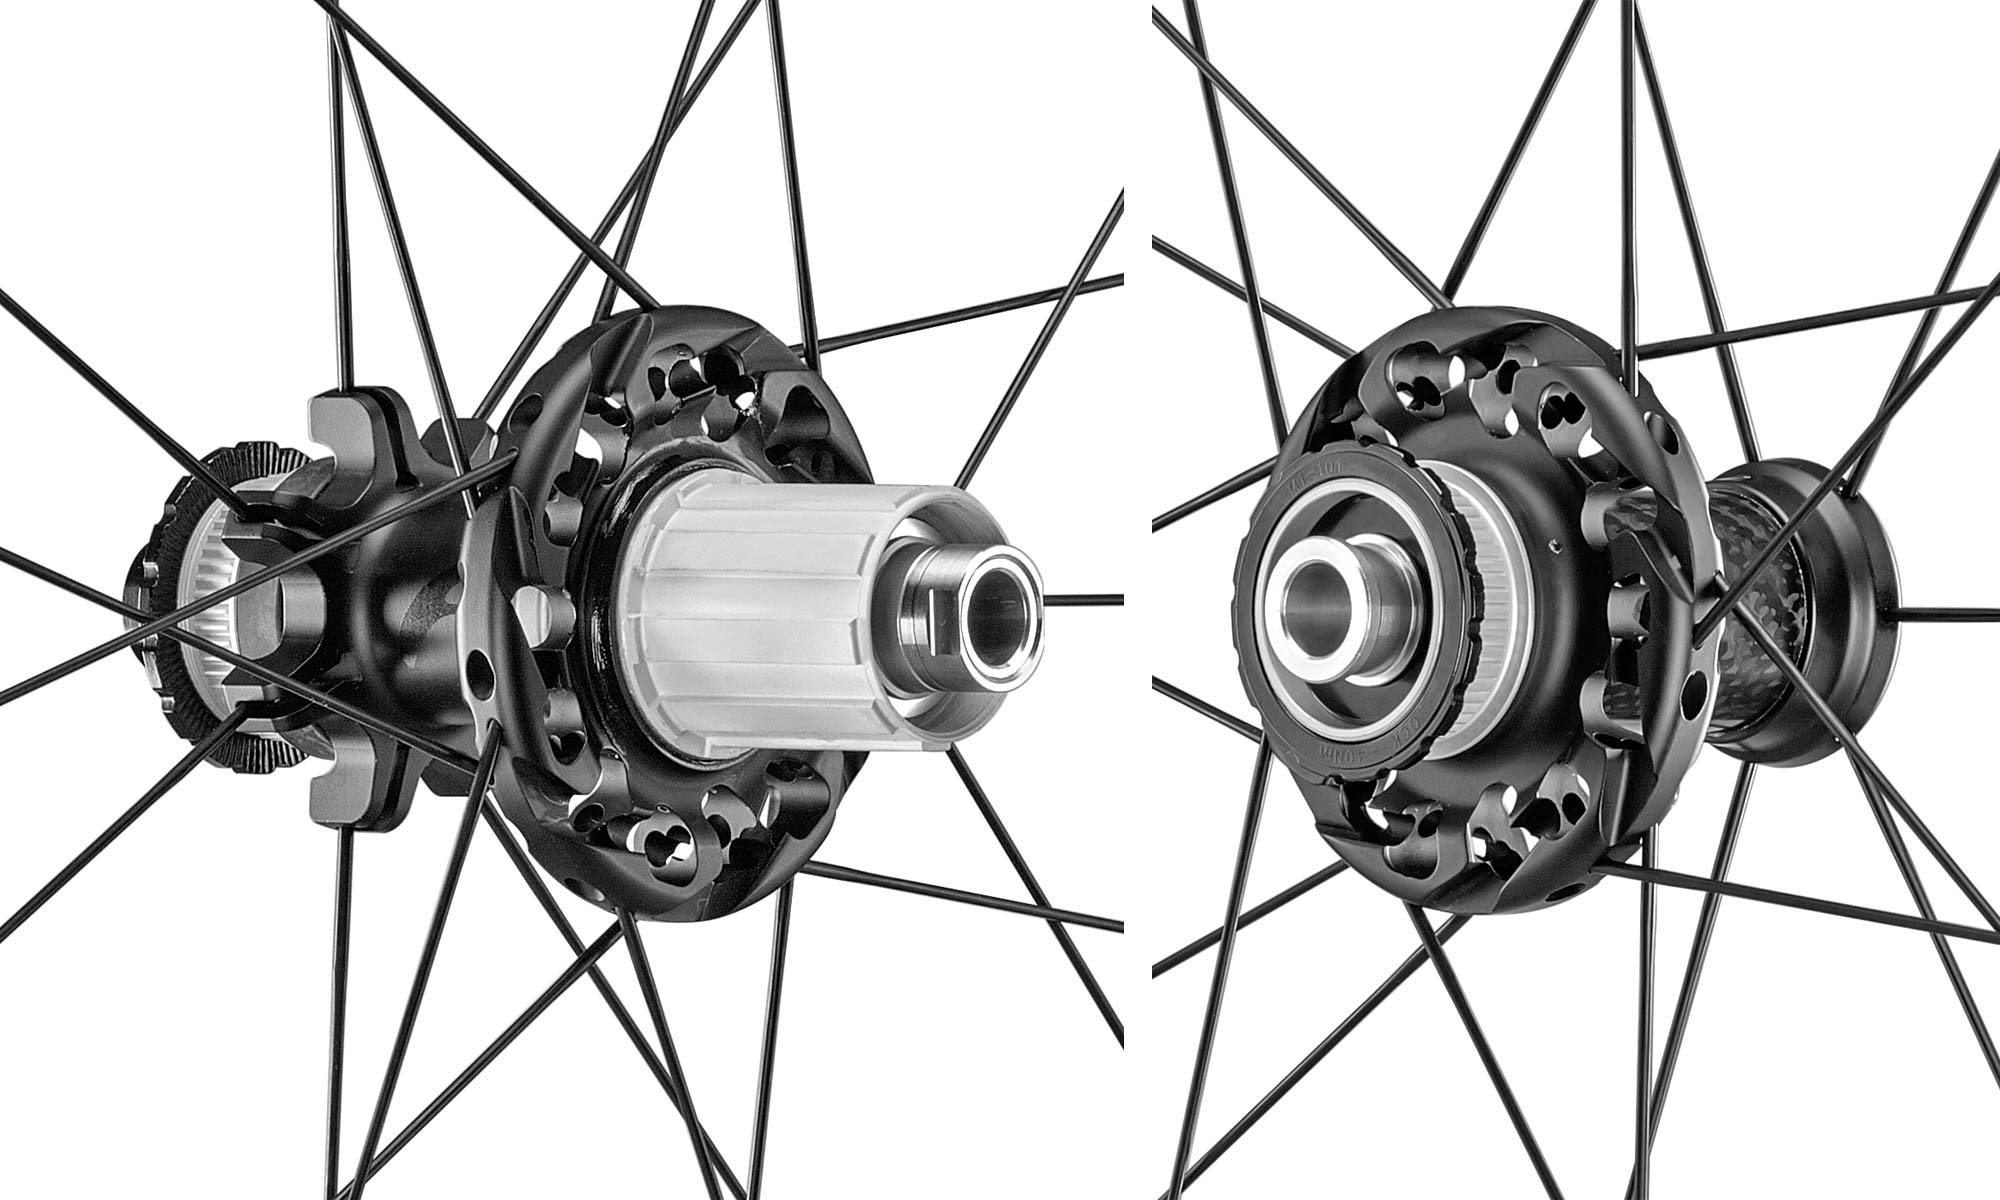 2021-Fulcrum-Speed-CMPTZN-40-55-DB-aero-carbon-road-wheels_55mm-40mm-aerodynamic-carbon-tubeless-disc-brake-road-bike-race-wheels_hub-details.jpg